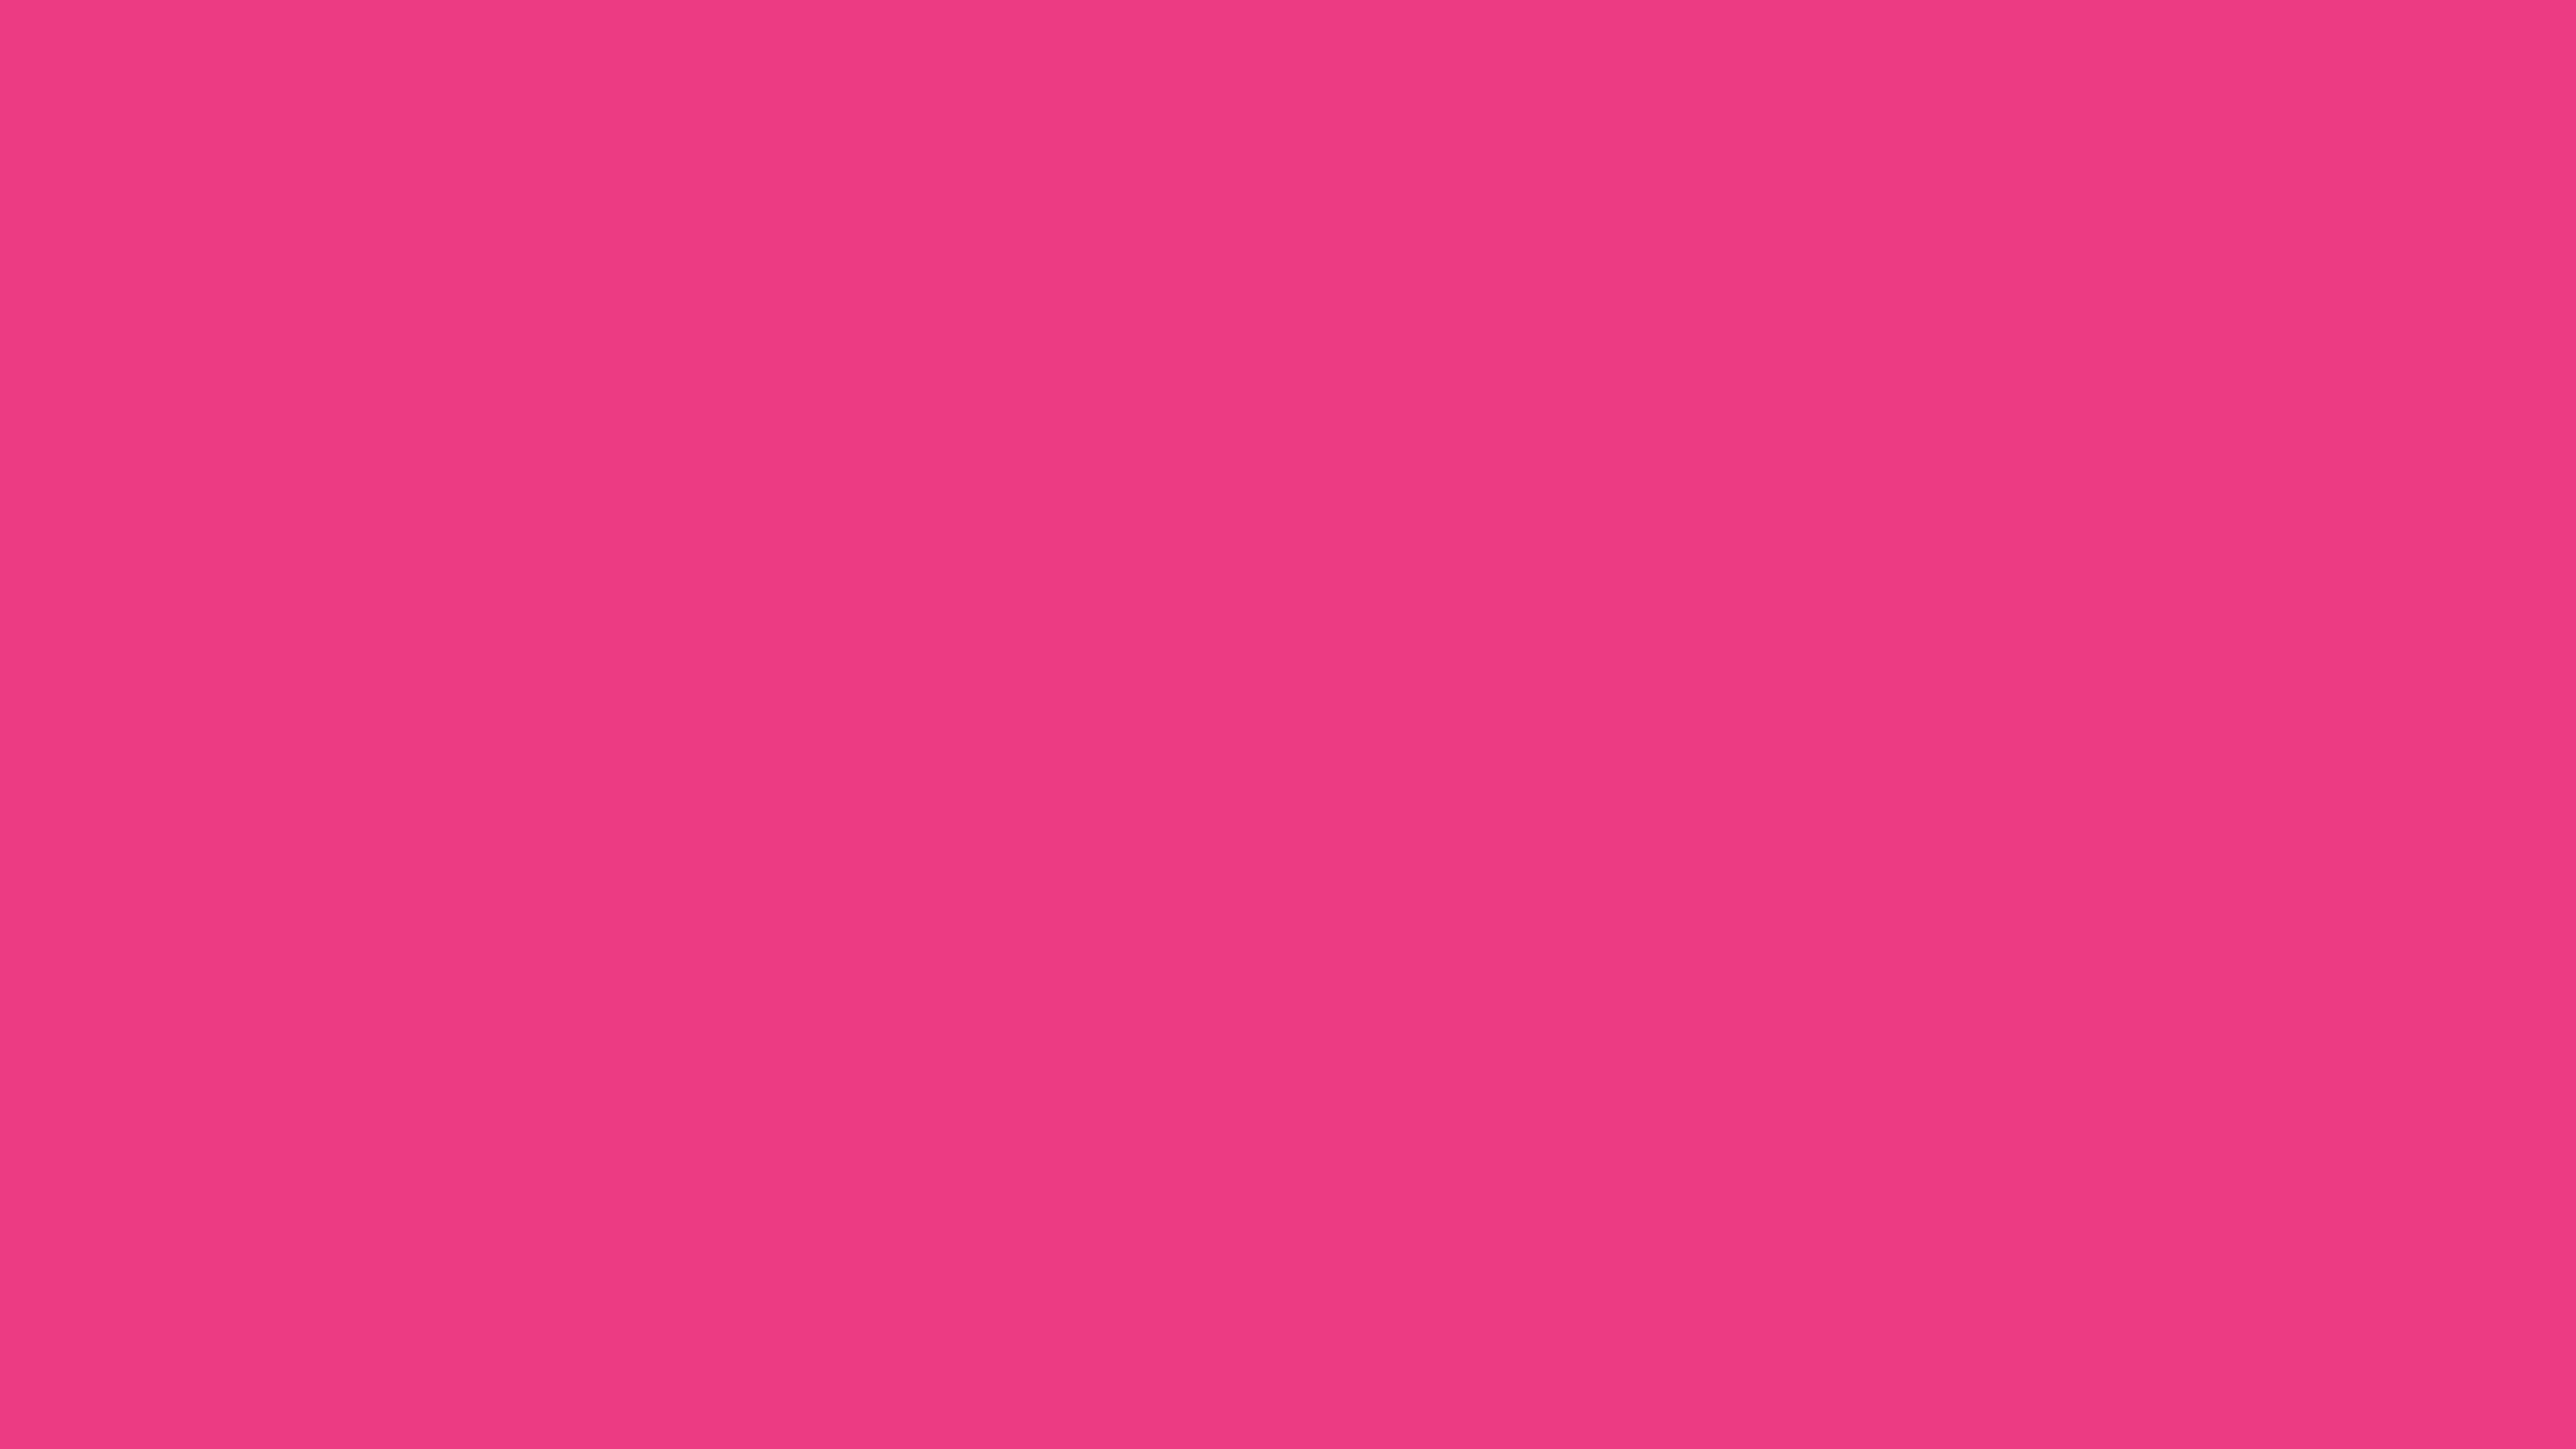 7680x4320 Cerise Pink Solid Color Background